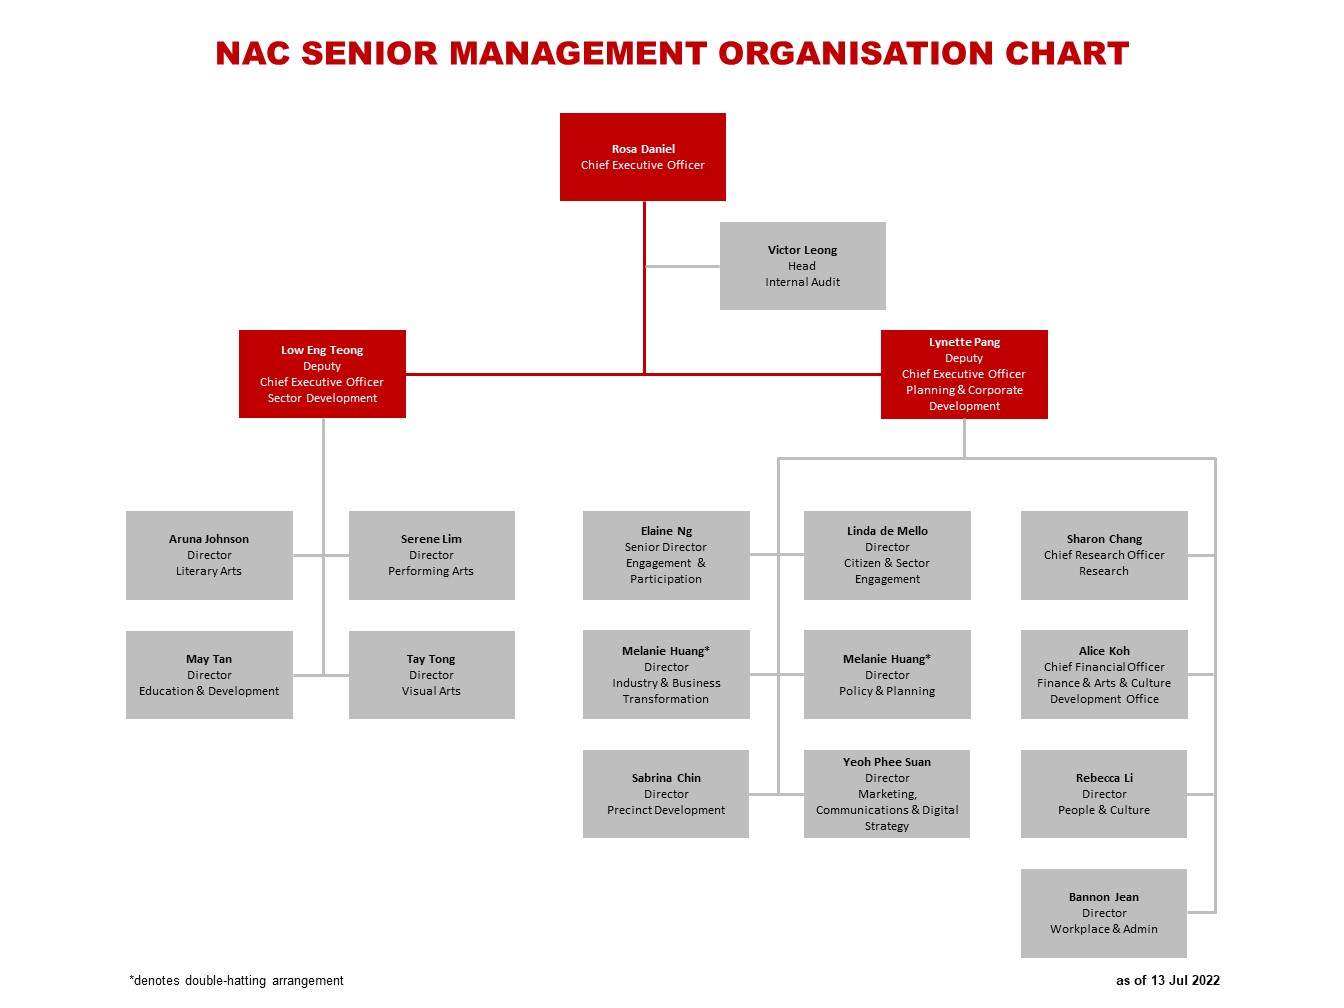 NAC Senior Management organisation chart (as of 13 July 2022)